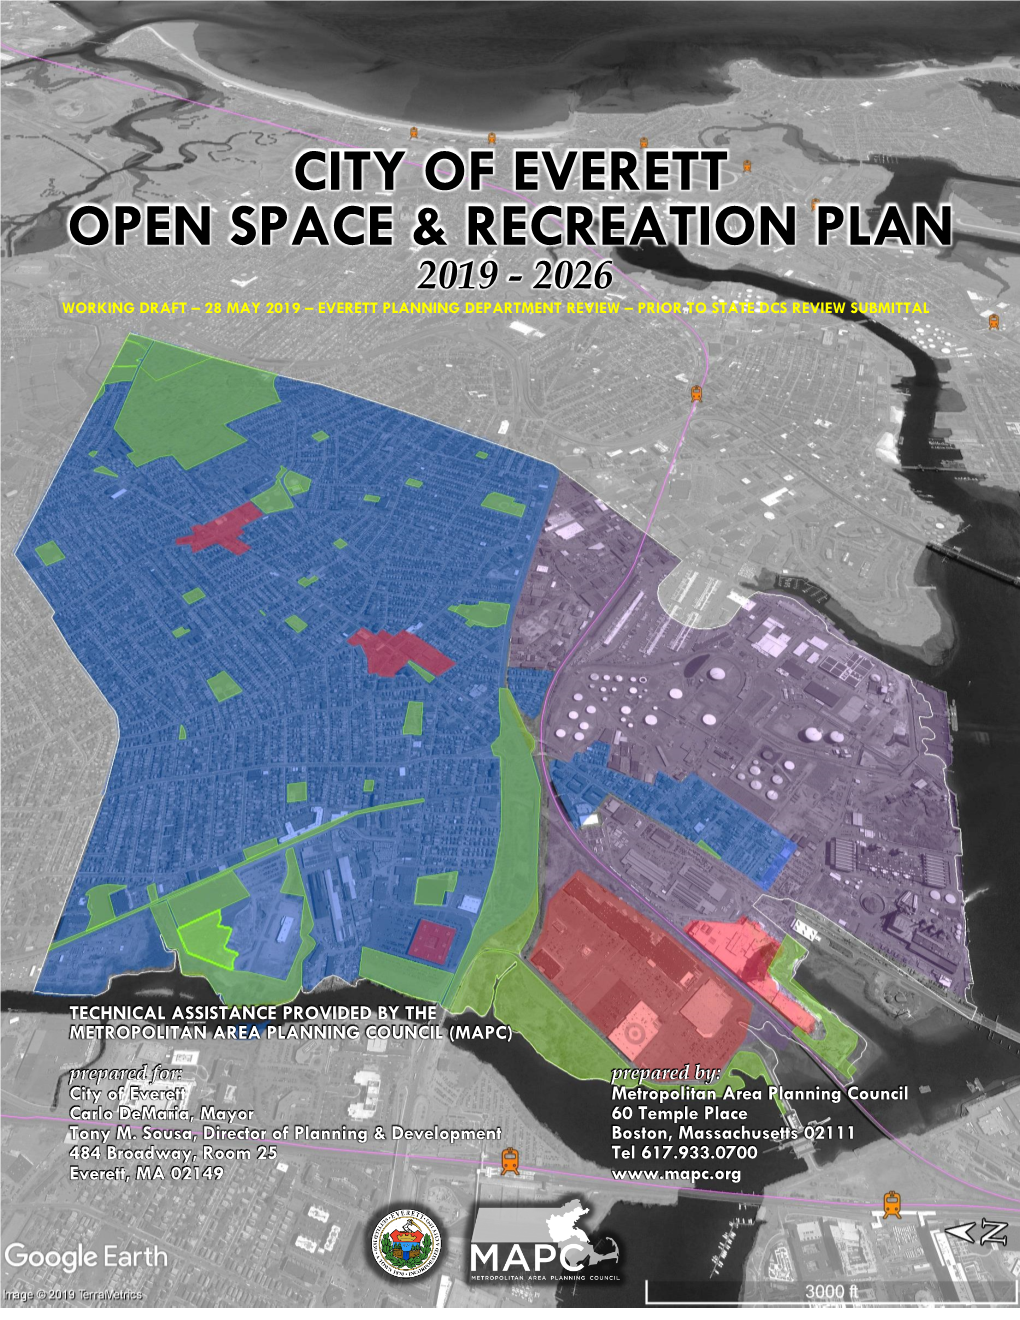 City of Everett Open Space & Recreation Plan 2019